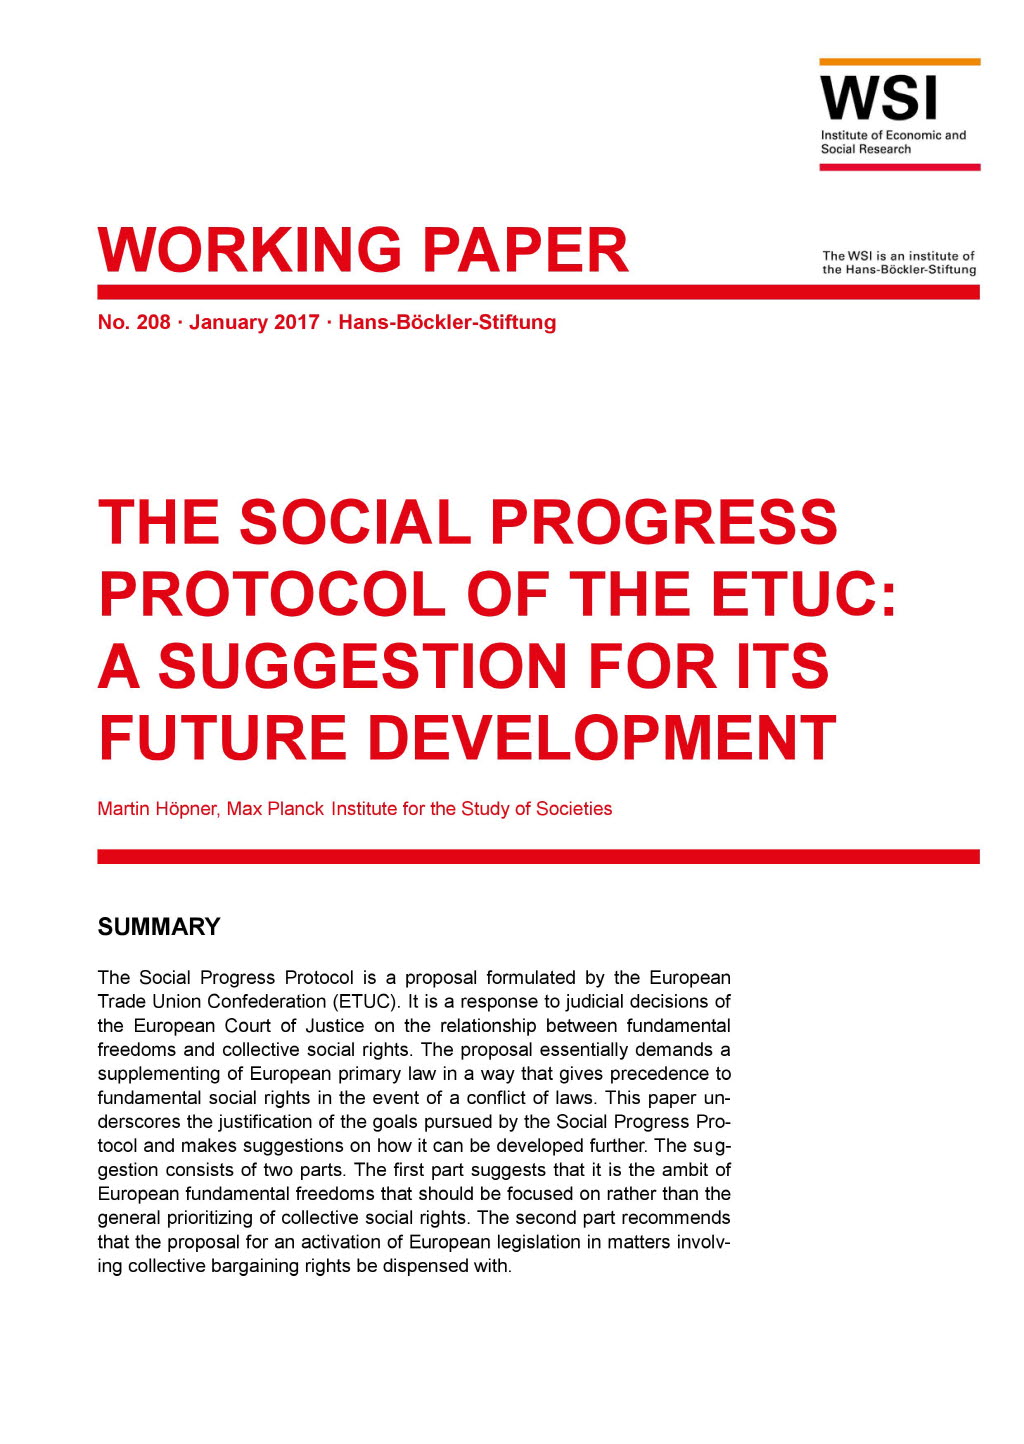 The Social Progress Protocol of the ETUC